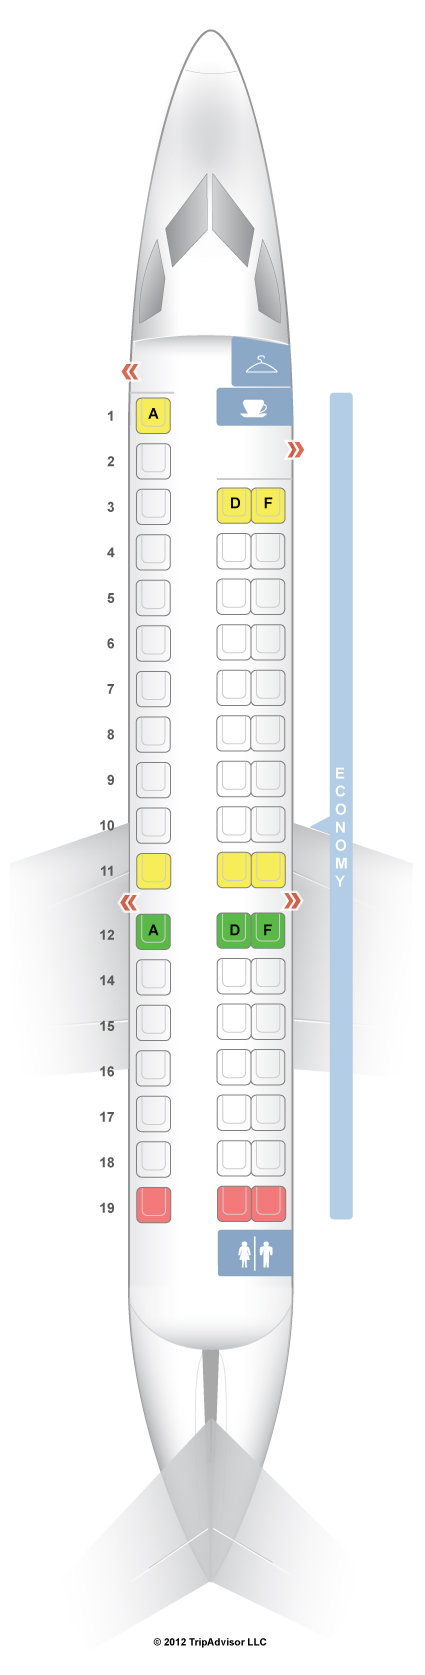 Embraer Emb 145 Seat Map Slubne Suknie Info